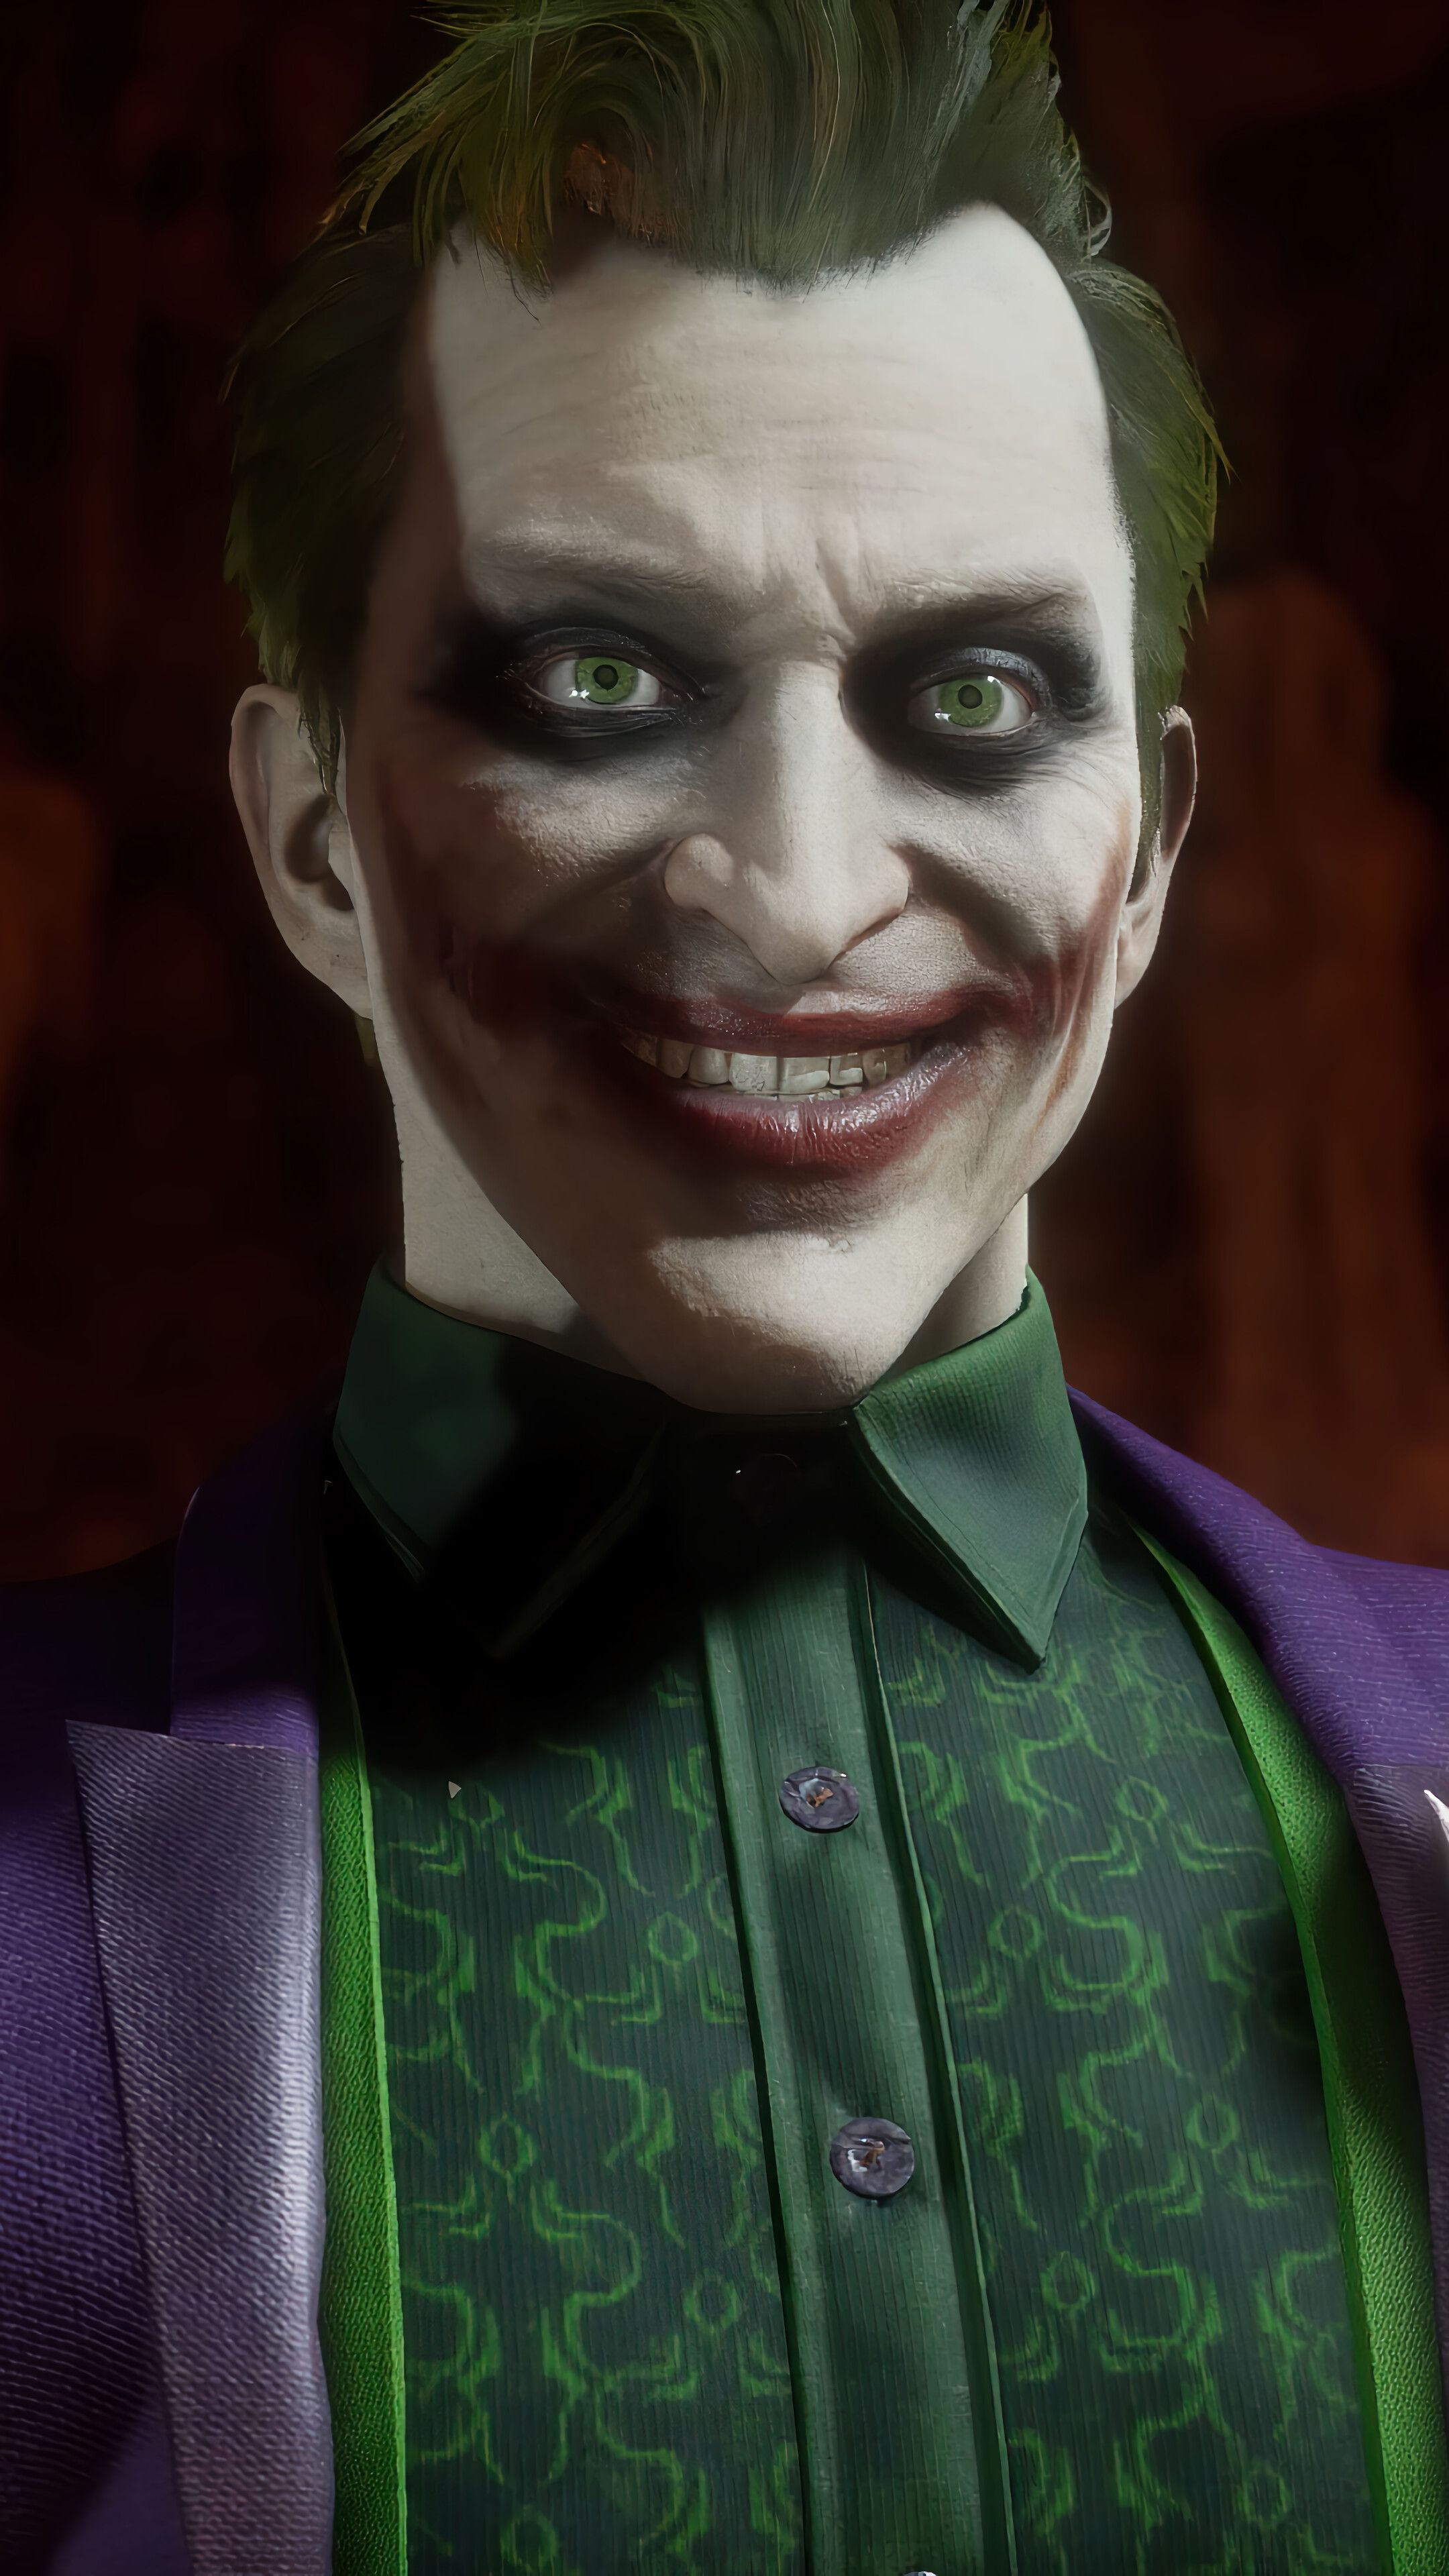 Joker, Smile, Mortal Kombat 4K phone HD Wallpaper, Image, Background, Photo and Picture